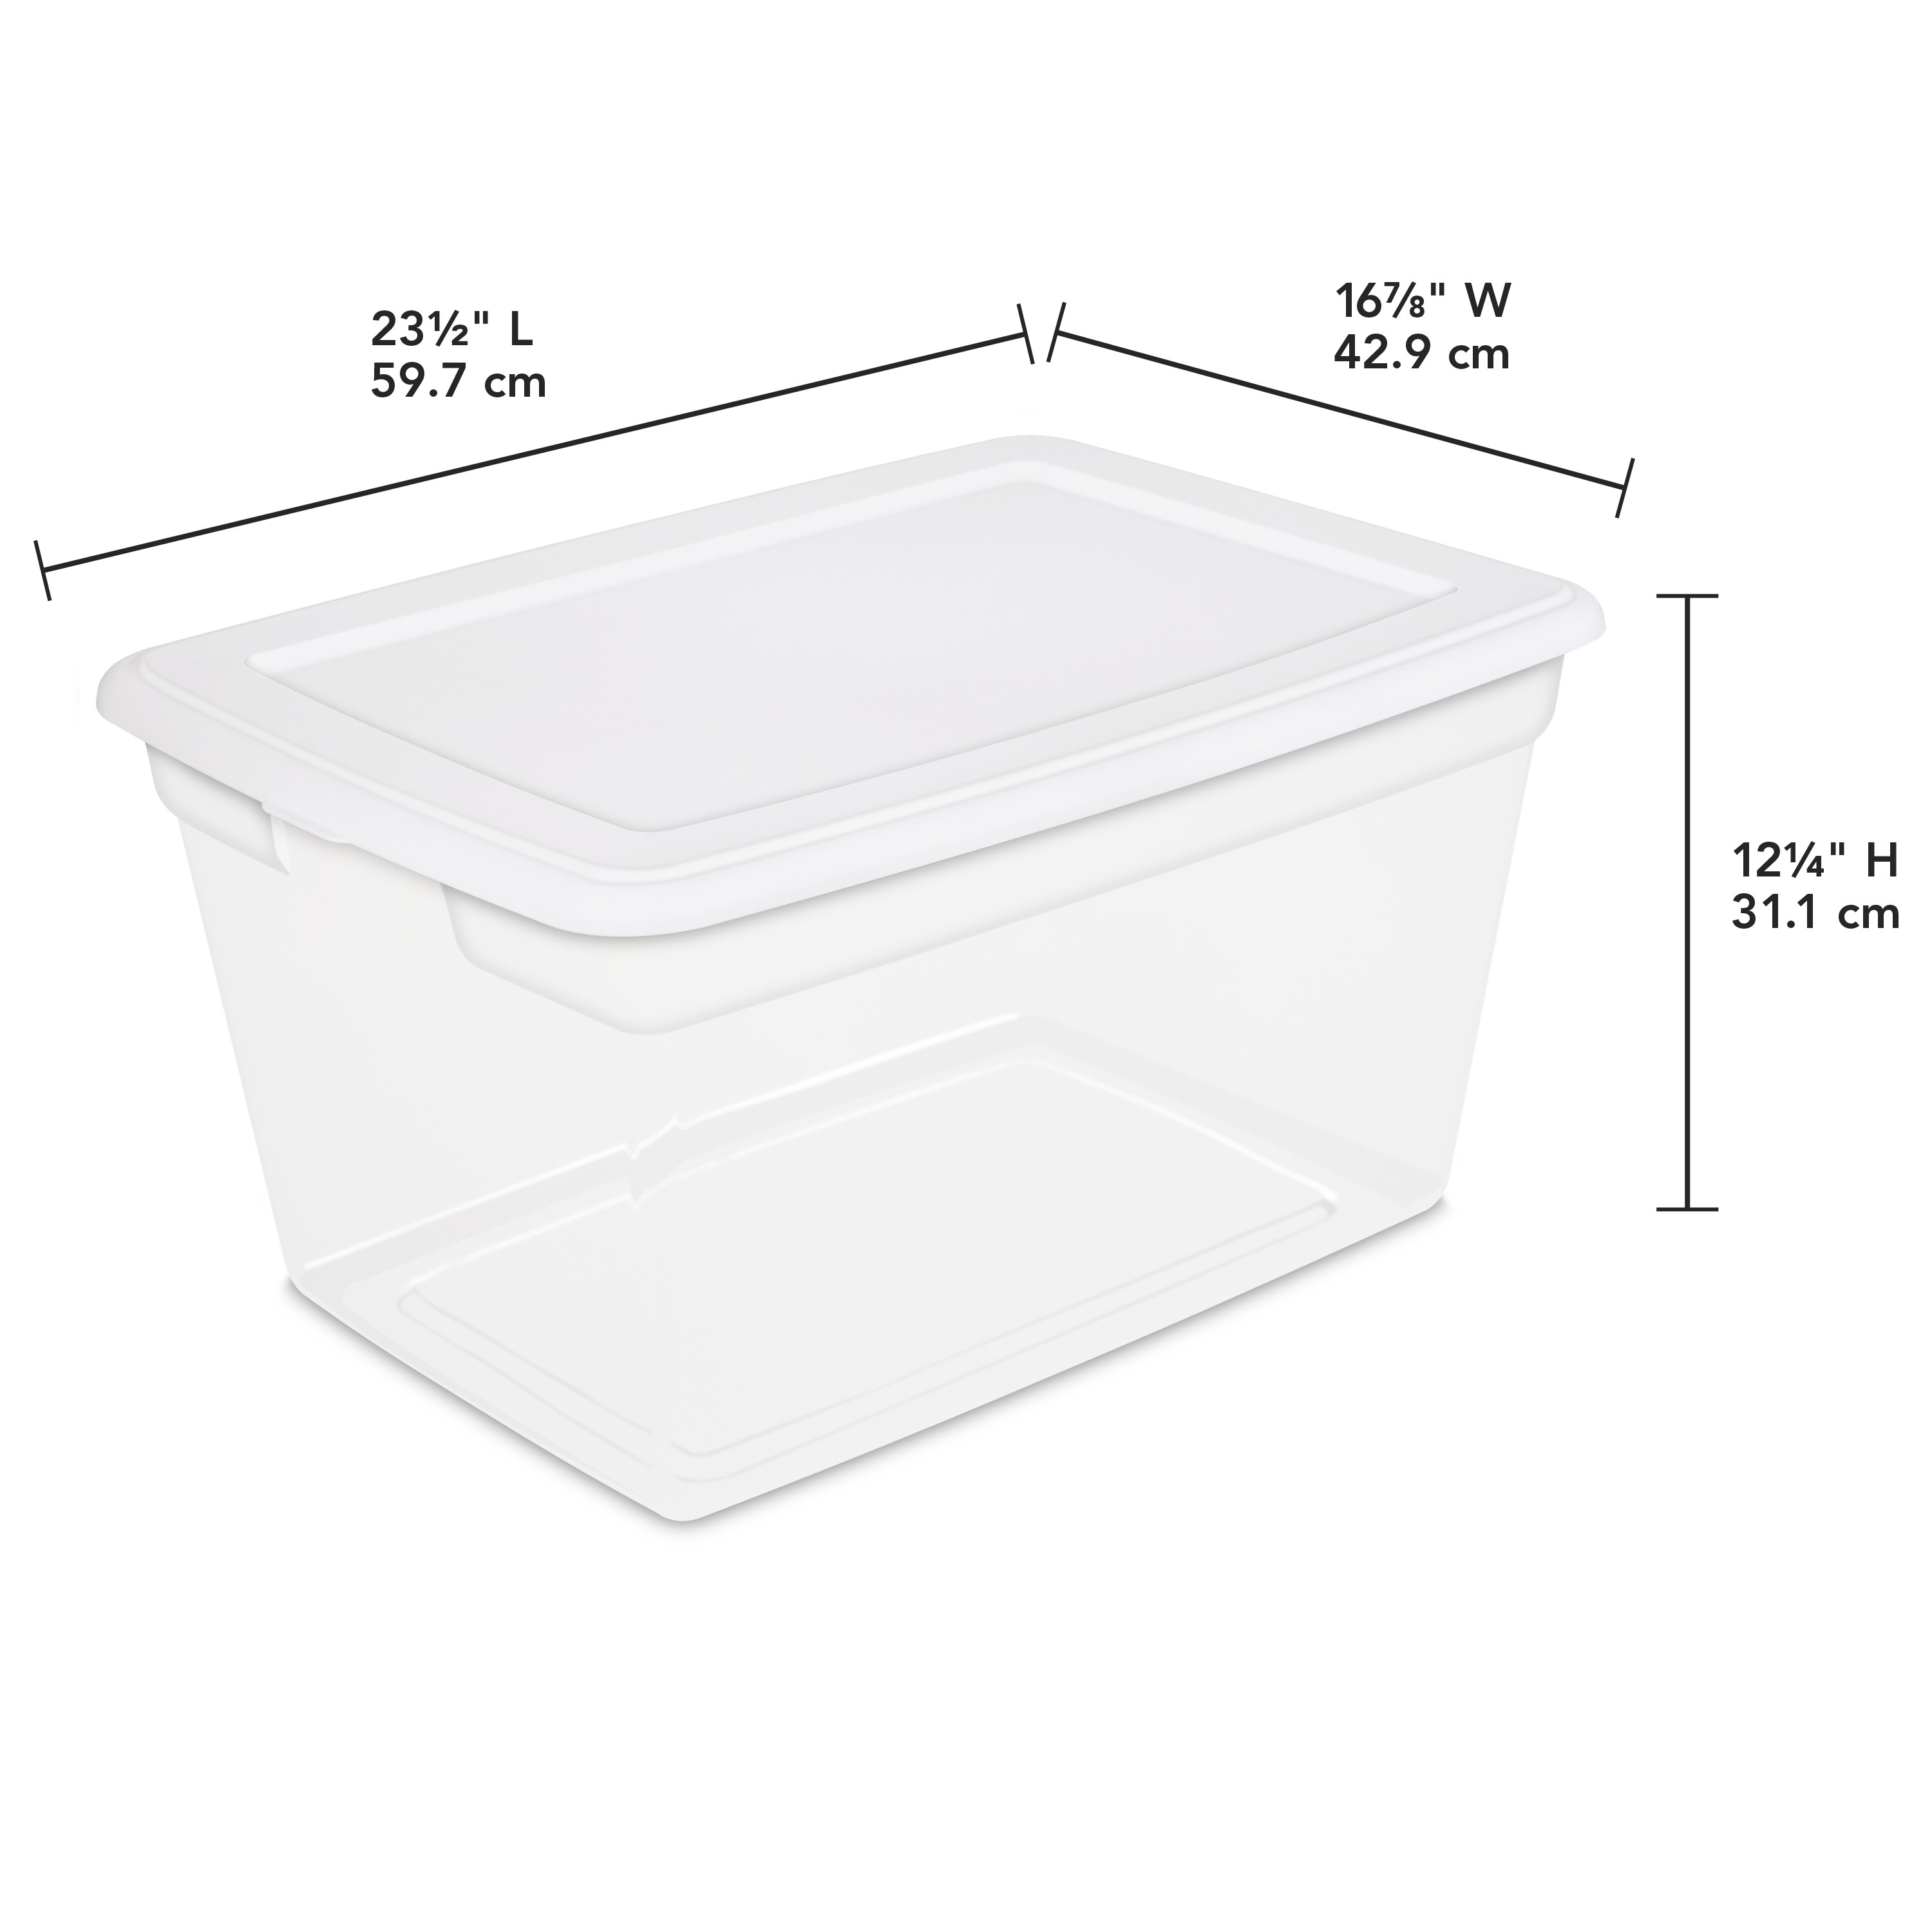 Sterilite 58 Qt. Clear Plastic Storage Box with White Lid - image 3 of 9